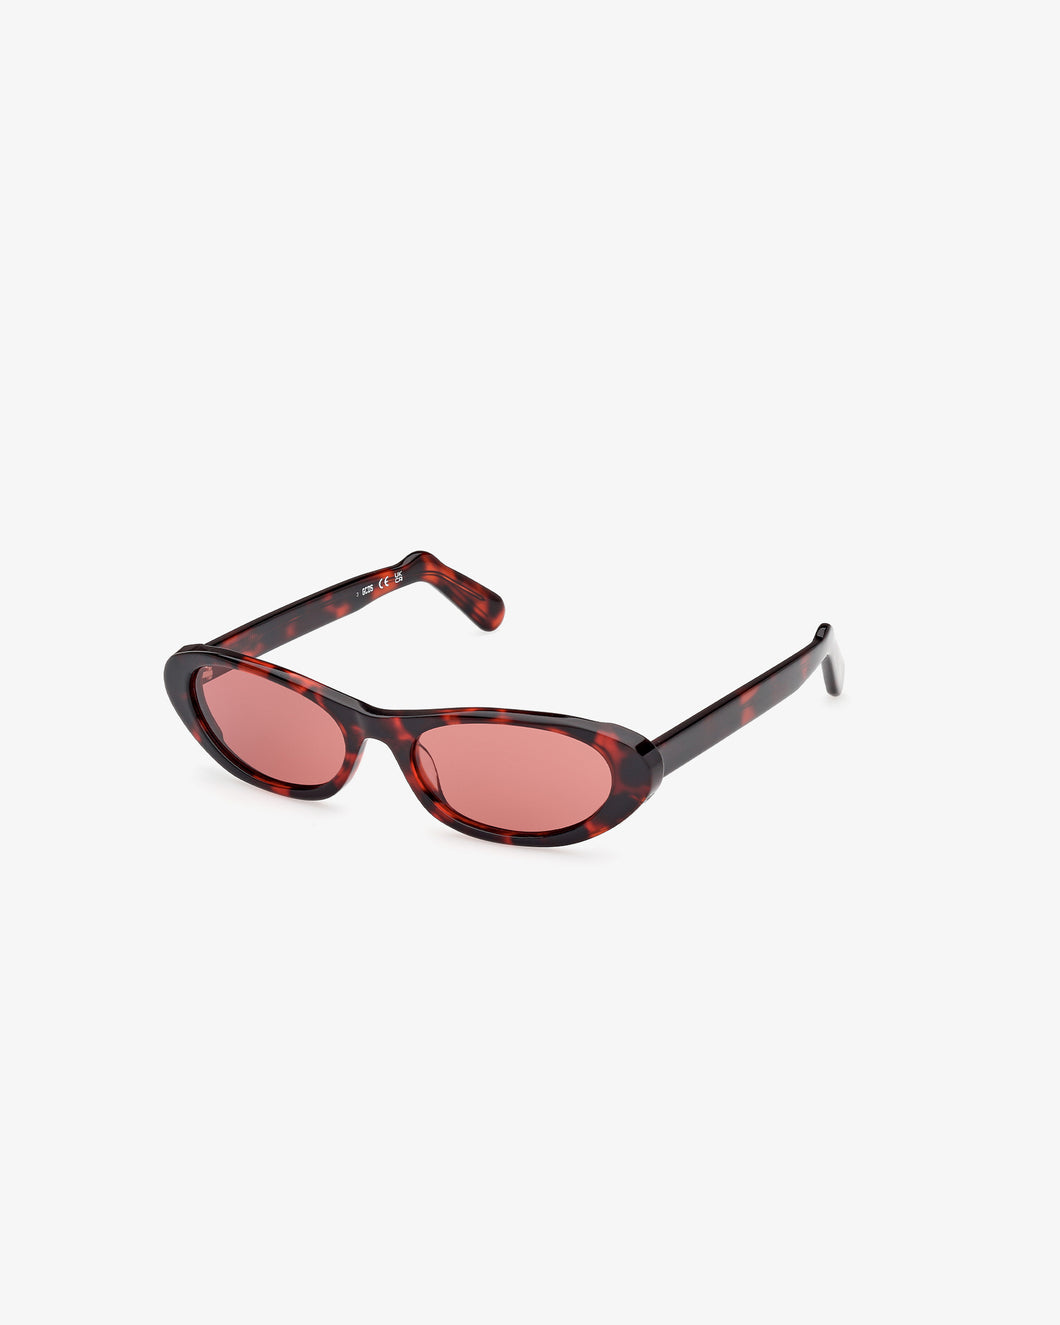 GD0021 Cat-eye Sunglasses